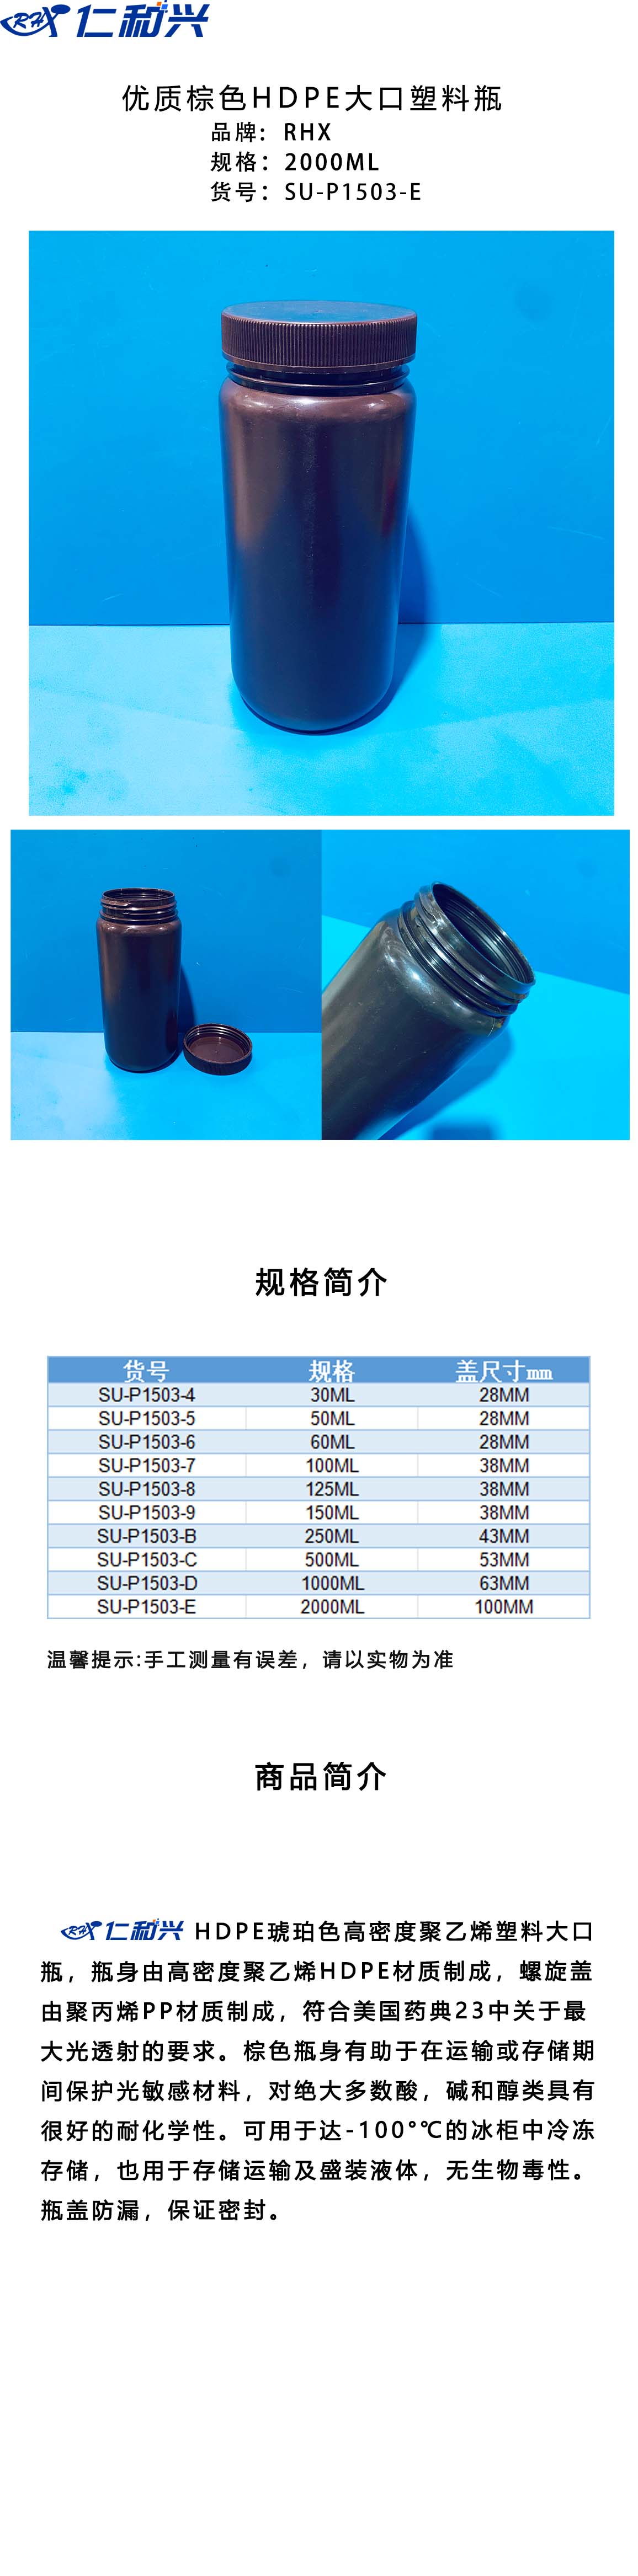 SU-P1503-E 棕色HDPE 大口塑料瓶 长图模板.jpg